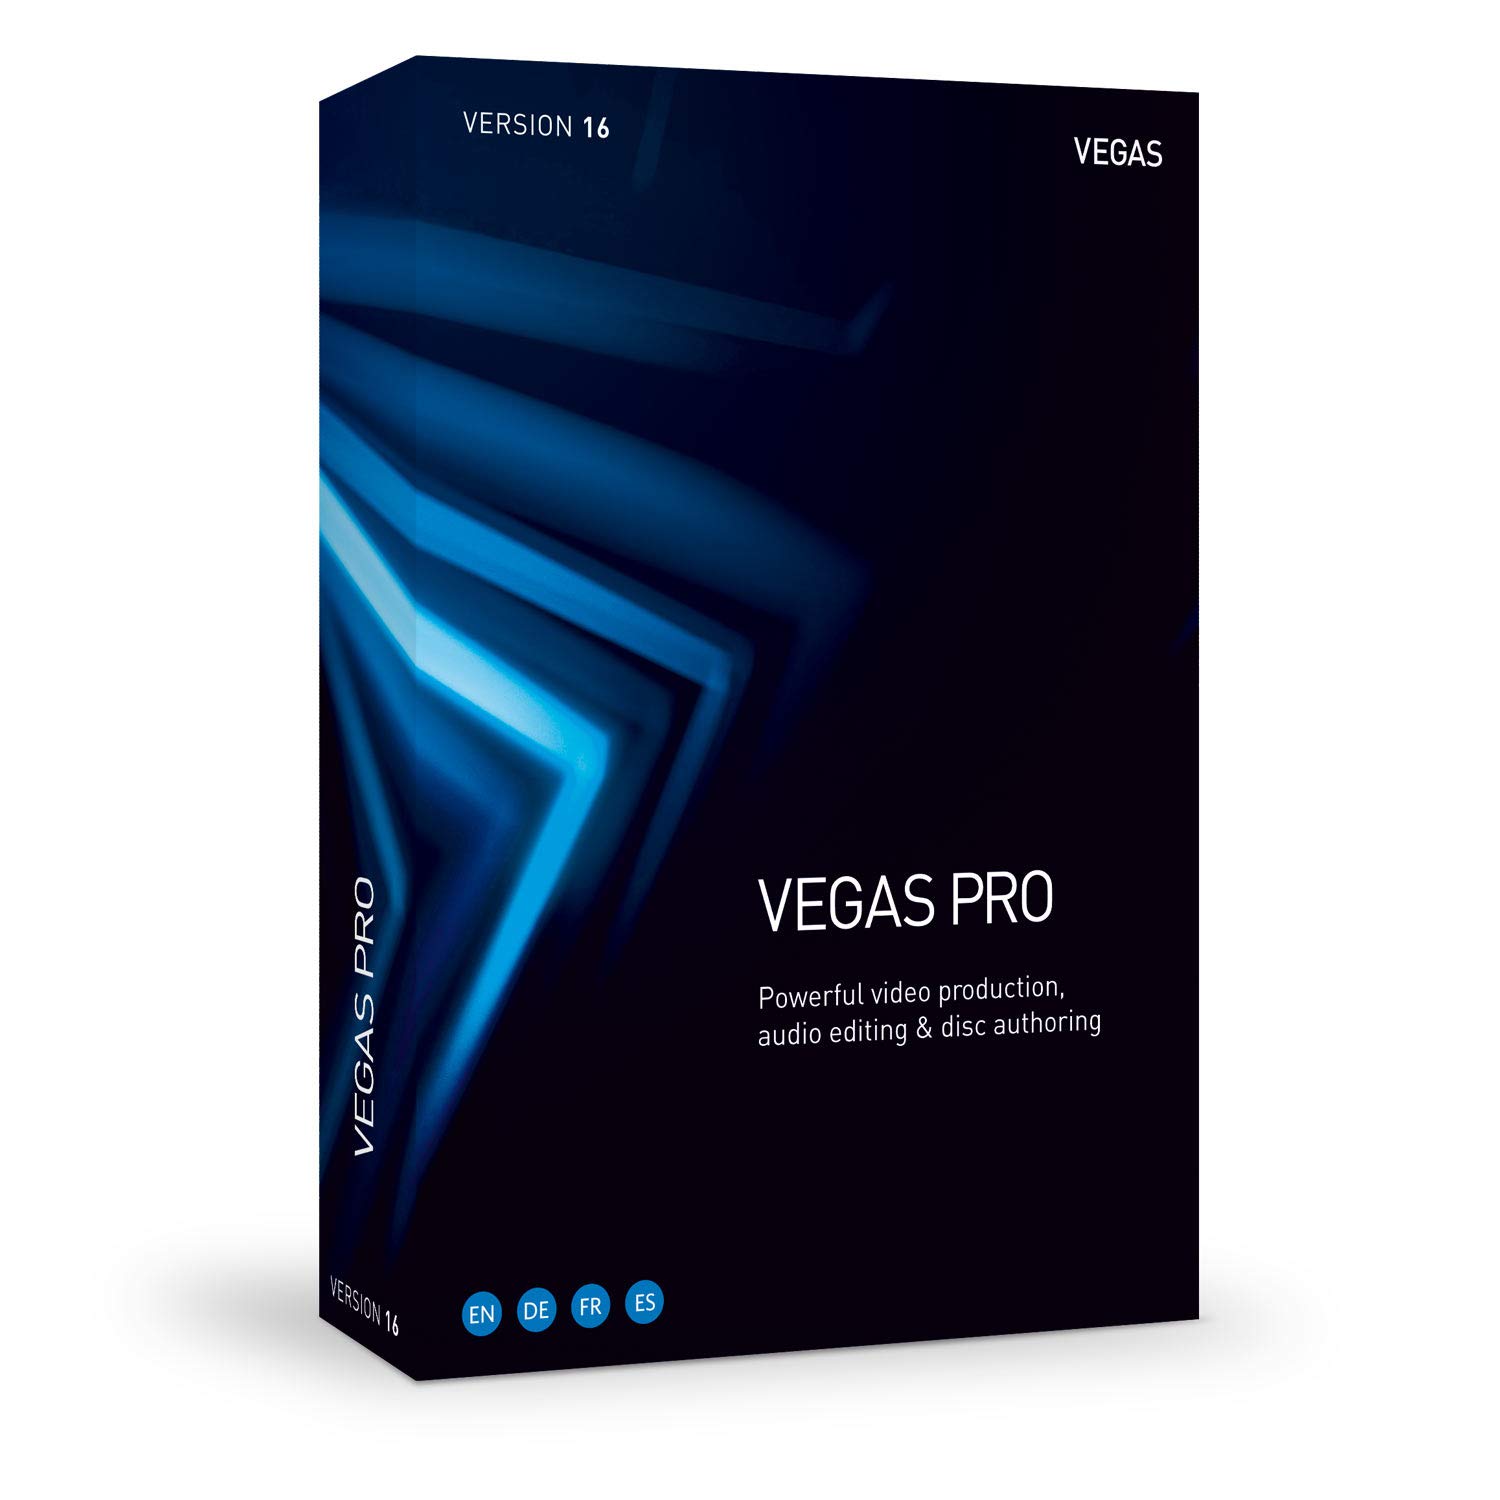 VEGAS Pro 16 - Edición profesional de video y edición de discos